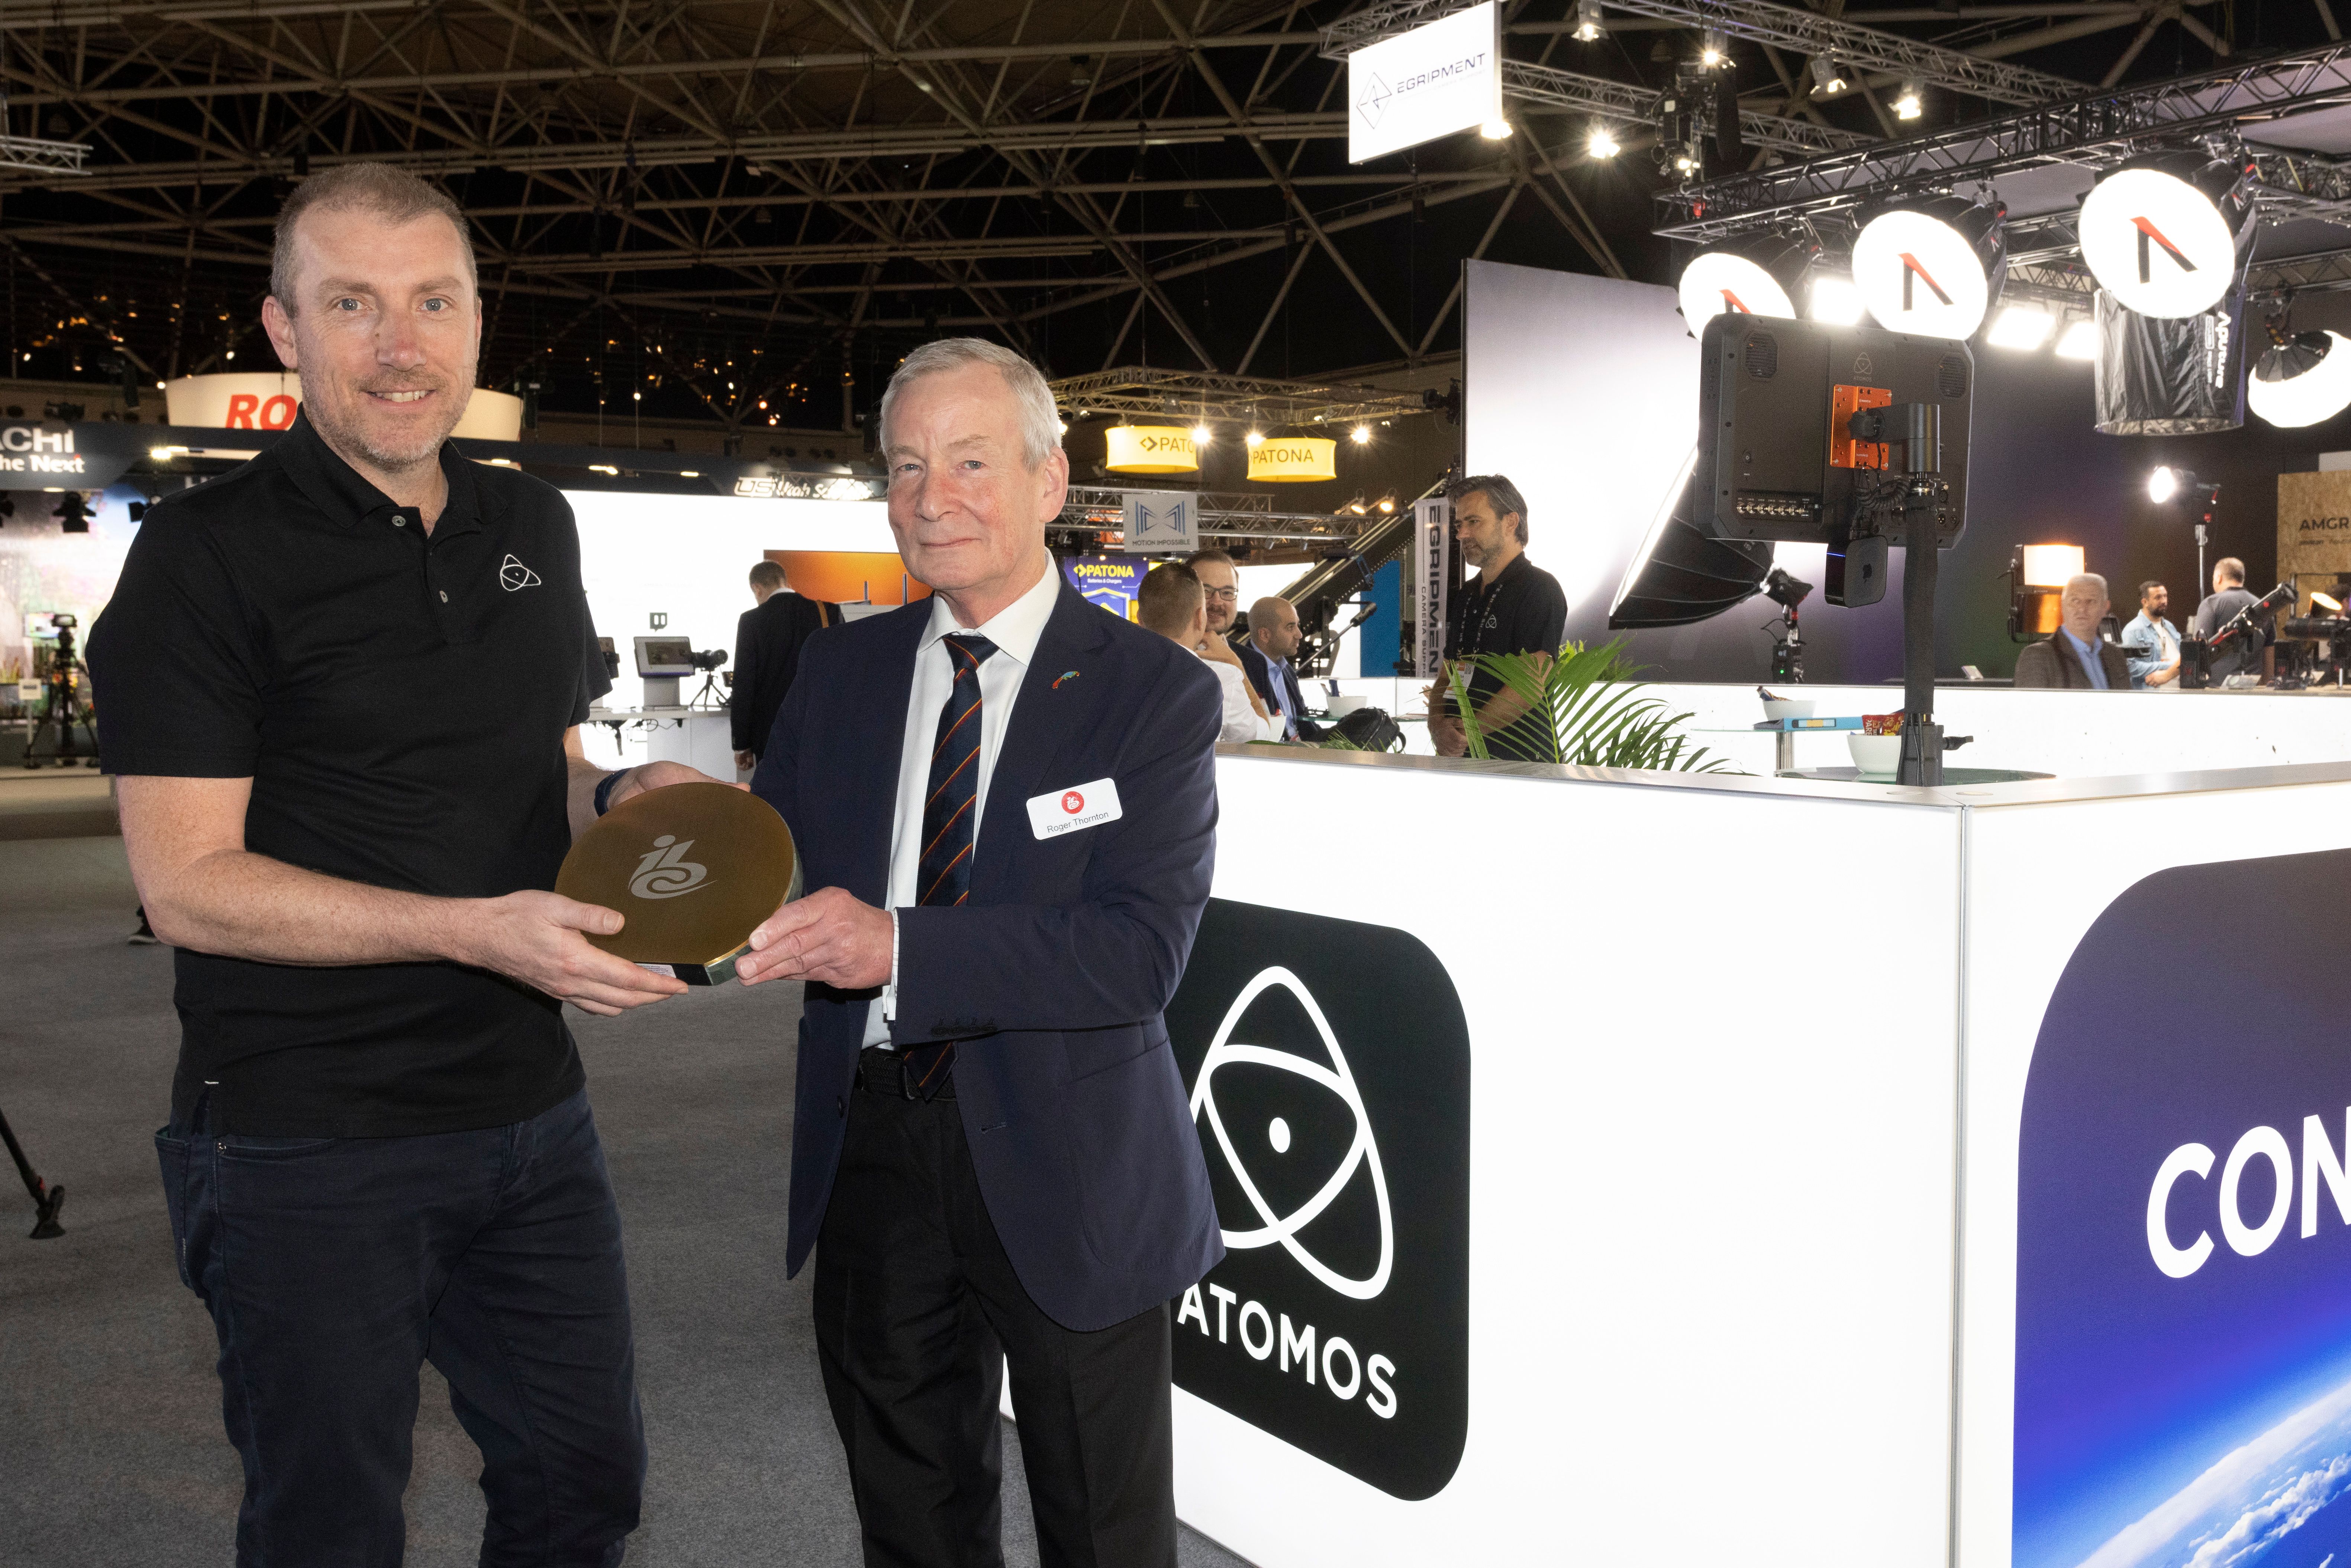 Judges’ Award for Stand Design Innovation WINNER: Atomos